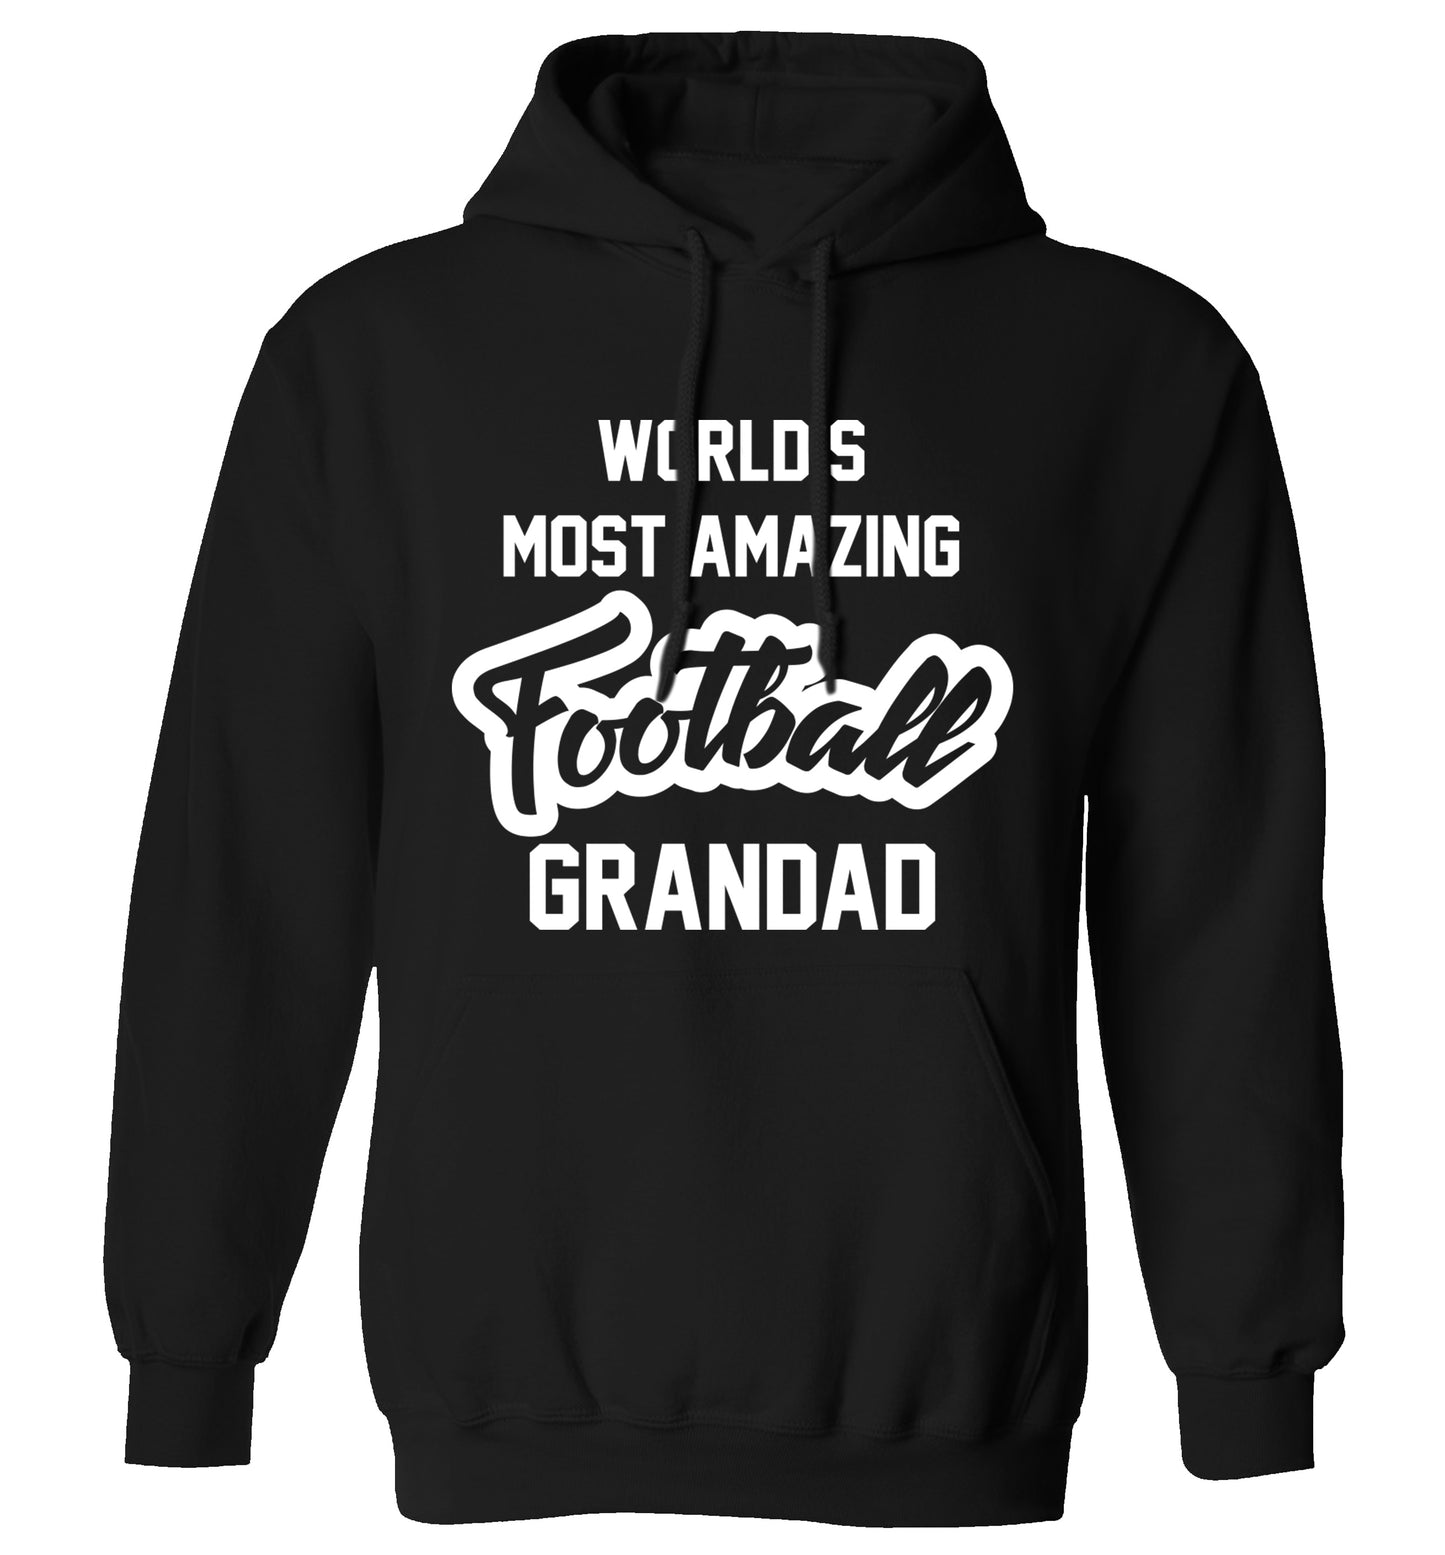 Worlds most amazing football grandad adults unisexblack hoodie 2XL